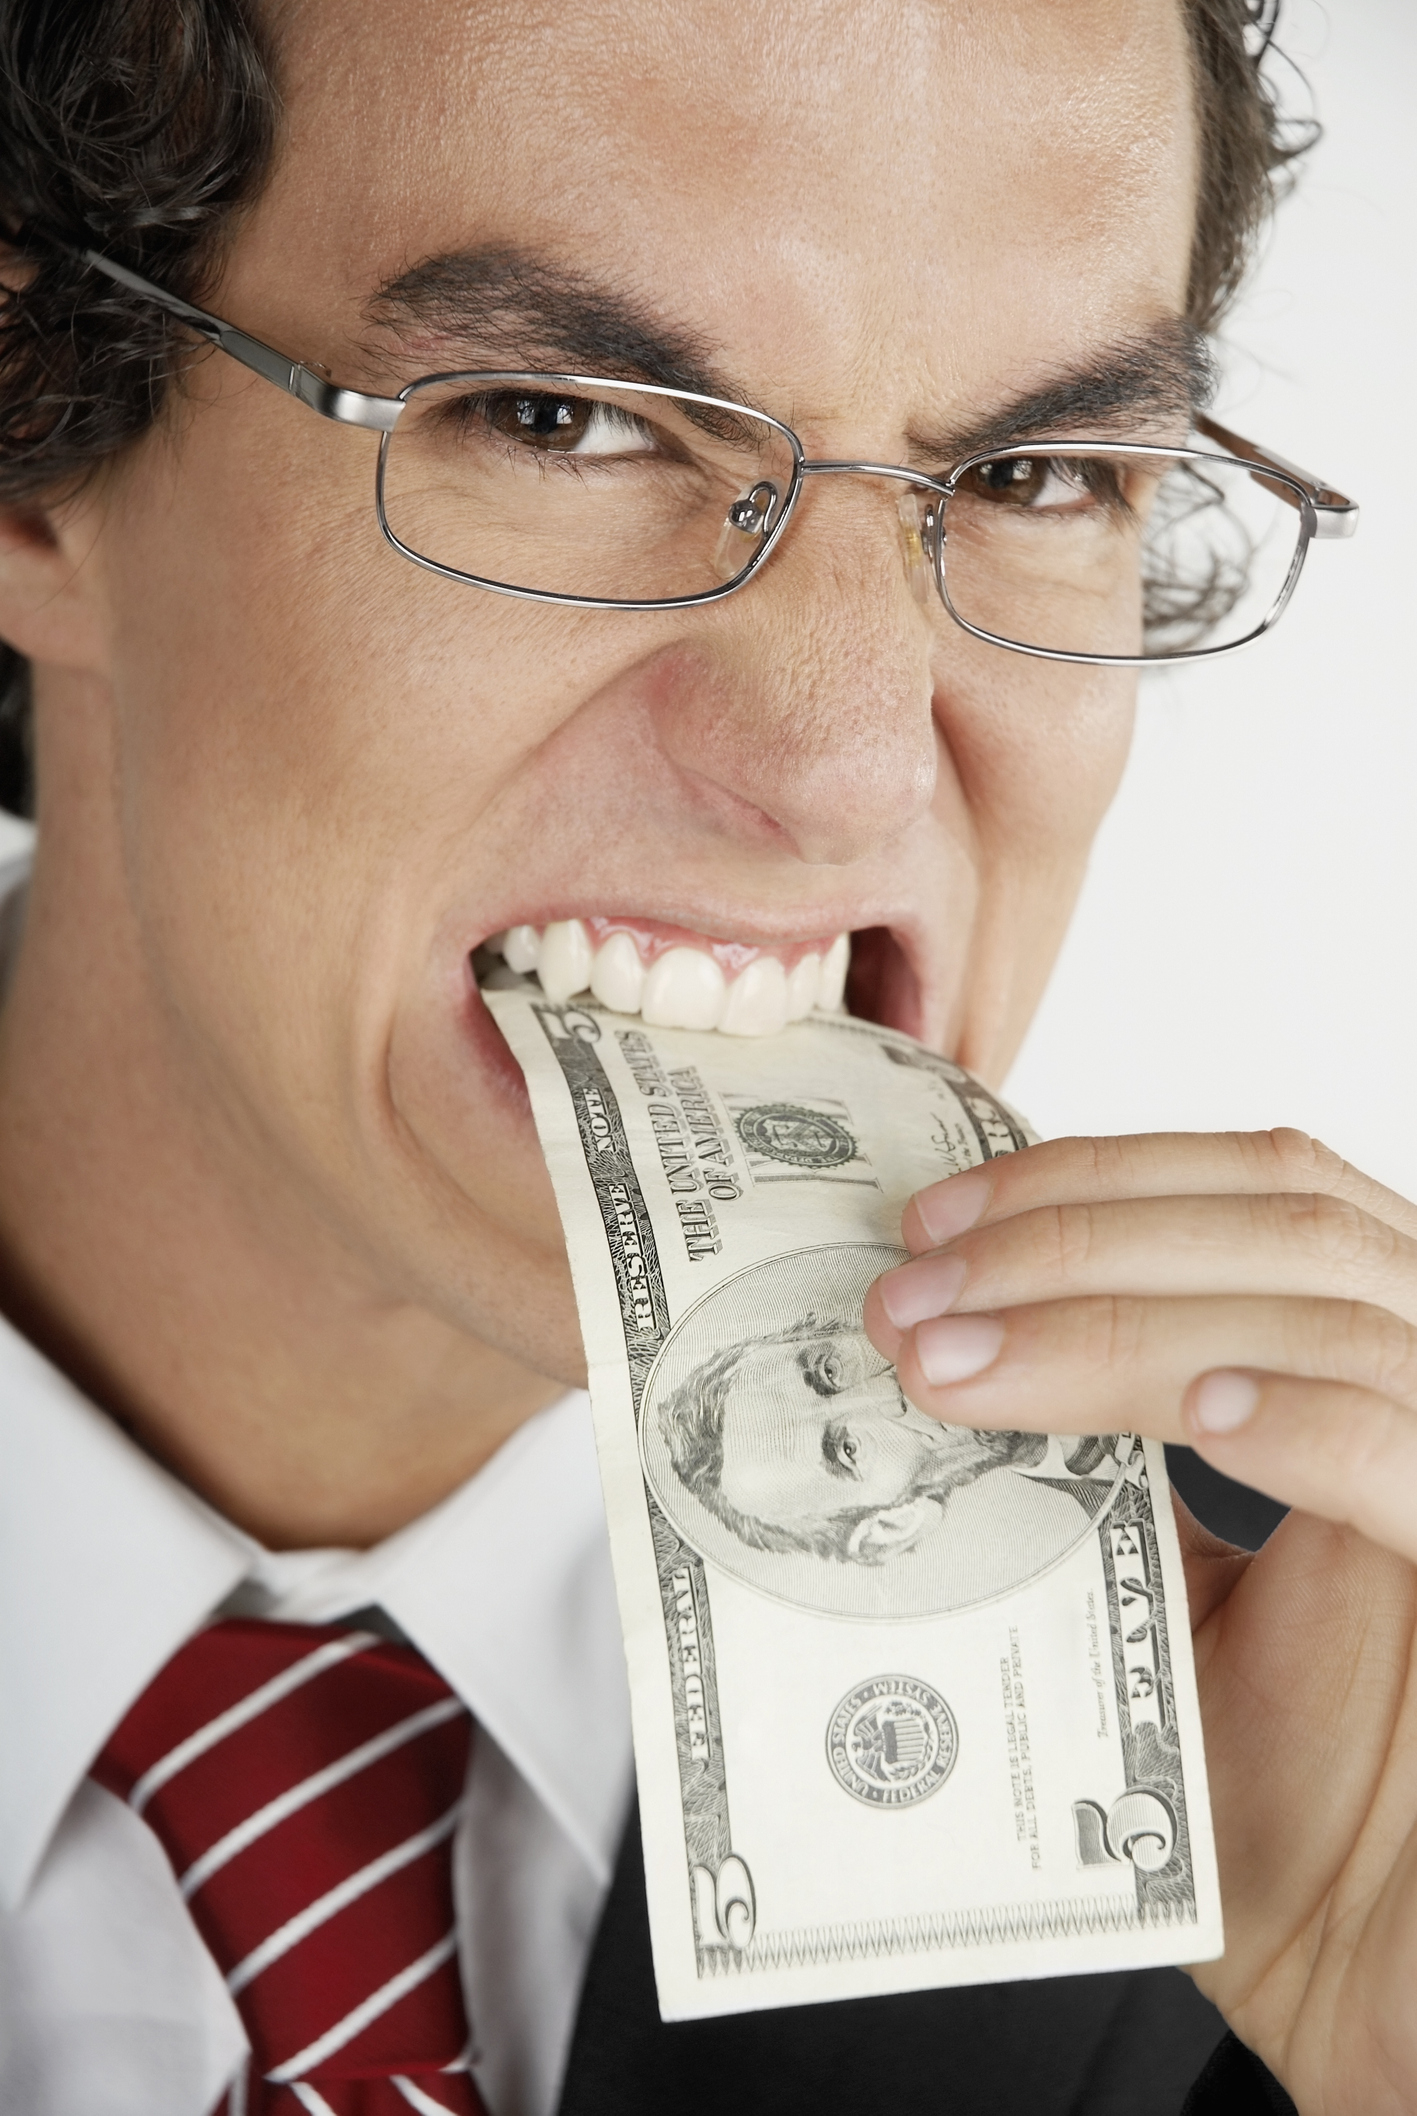 A man biting a $5 bill